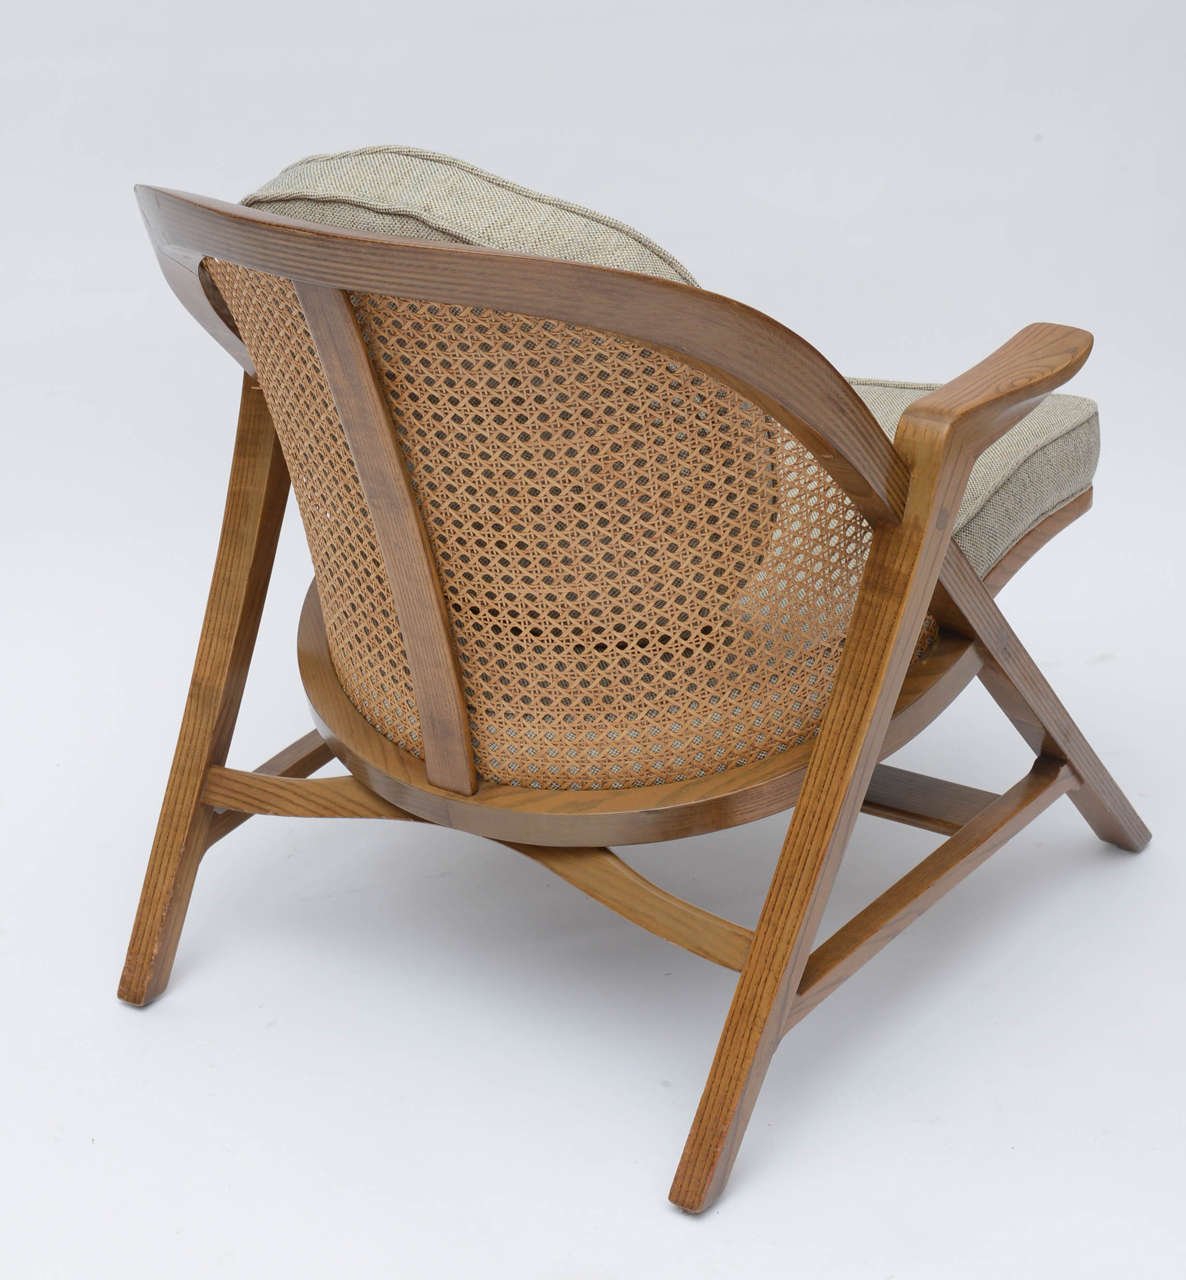 Cane Edward Wormley A-Frame Lounge Chairs